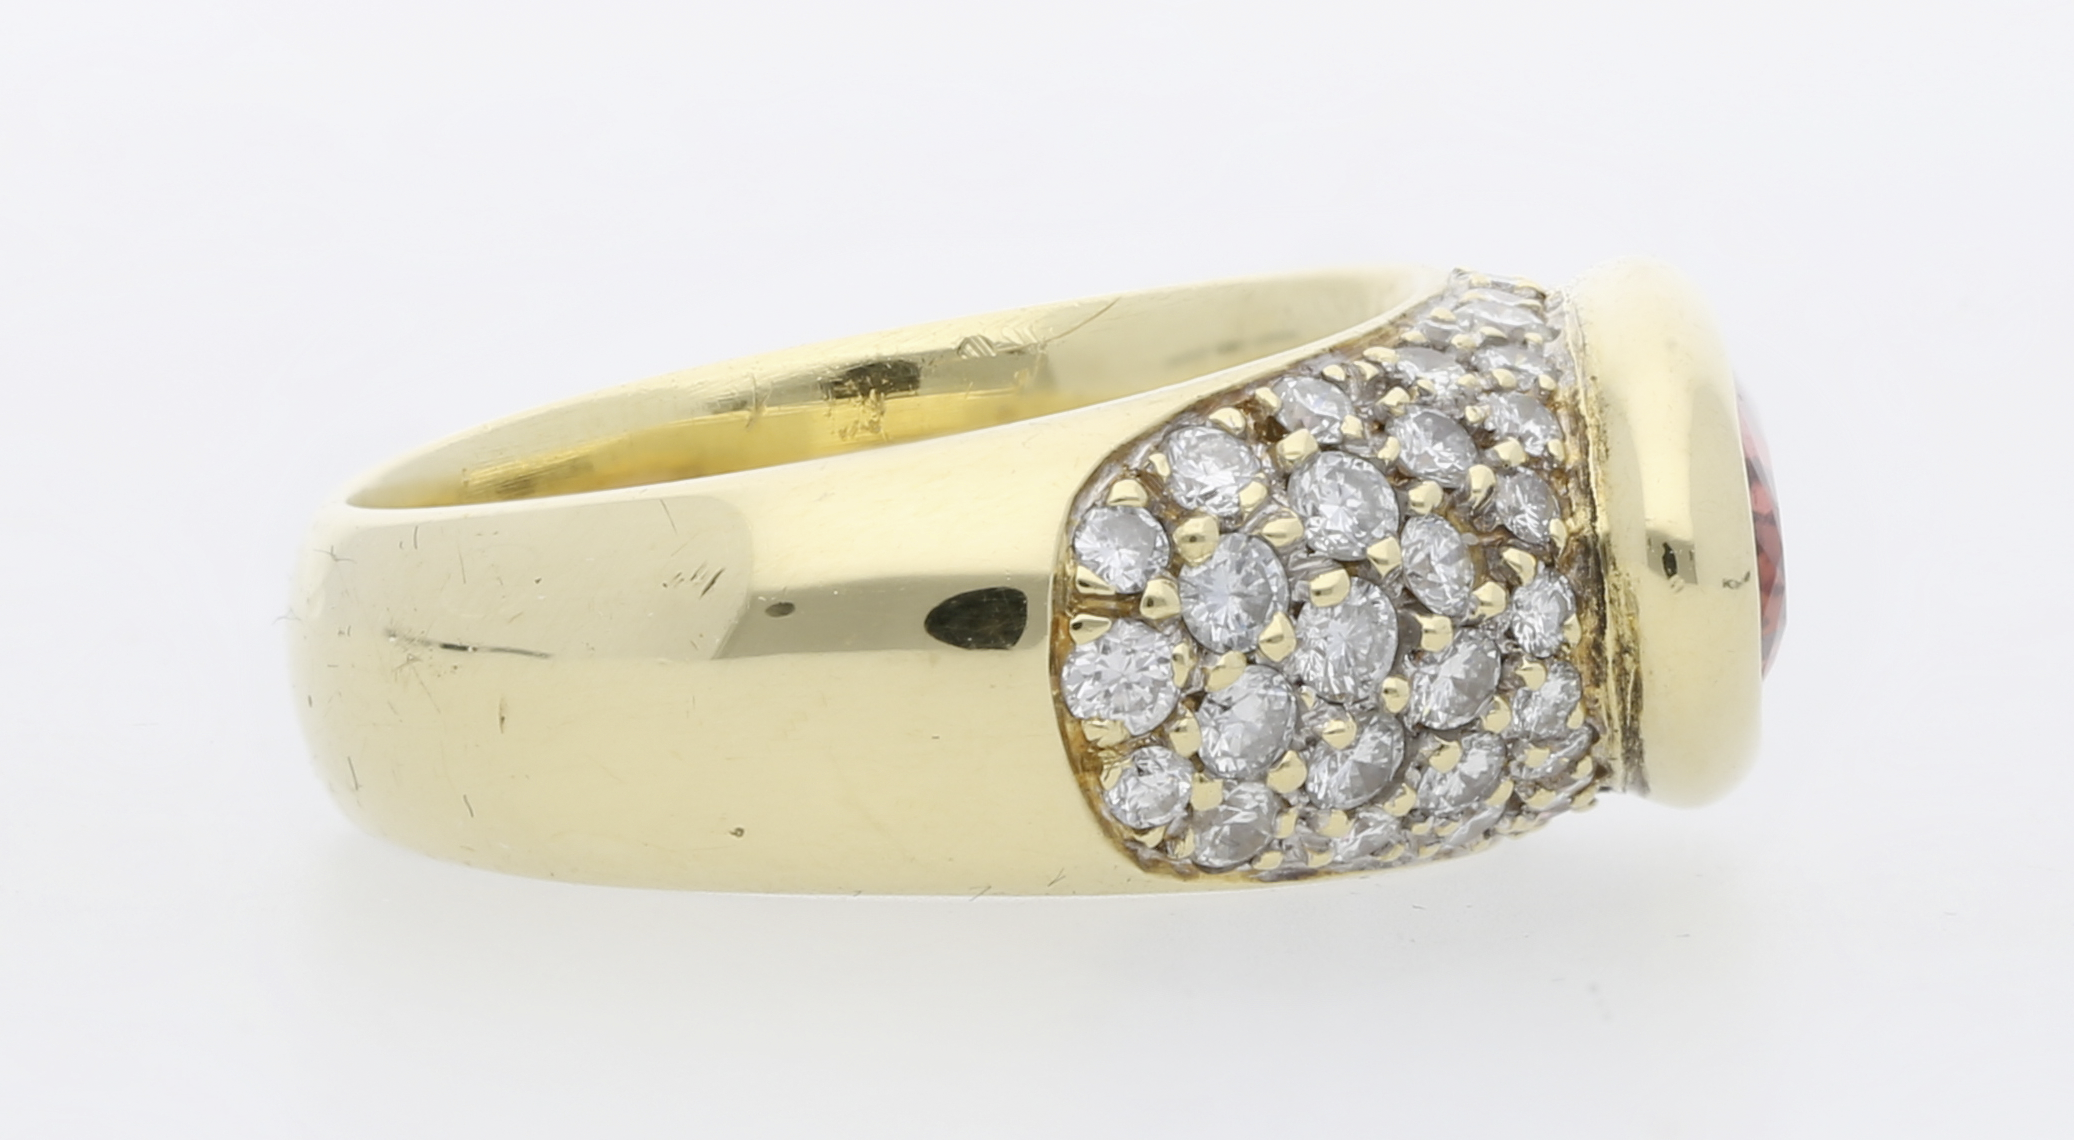 Topas-Diamant-Ring, H. Stern